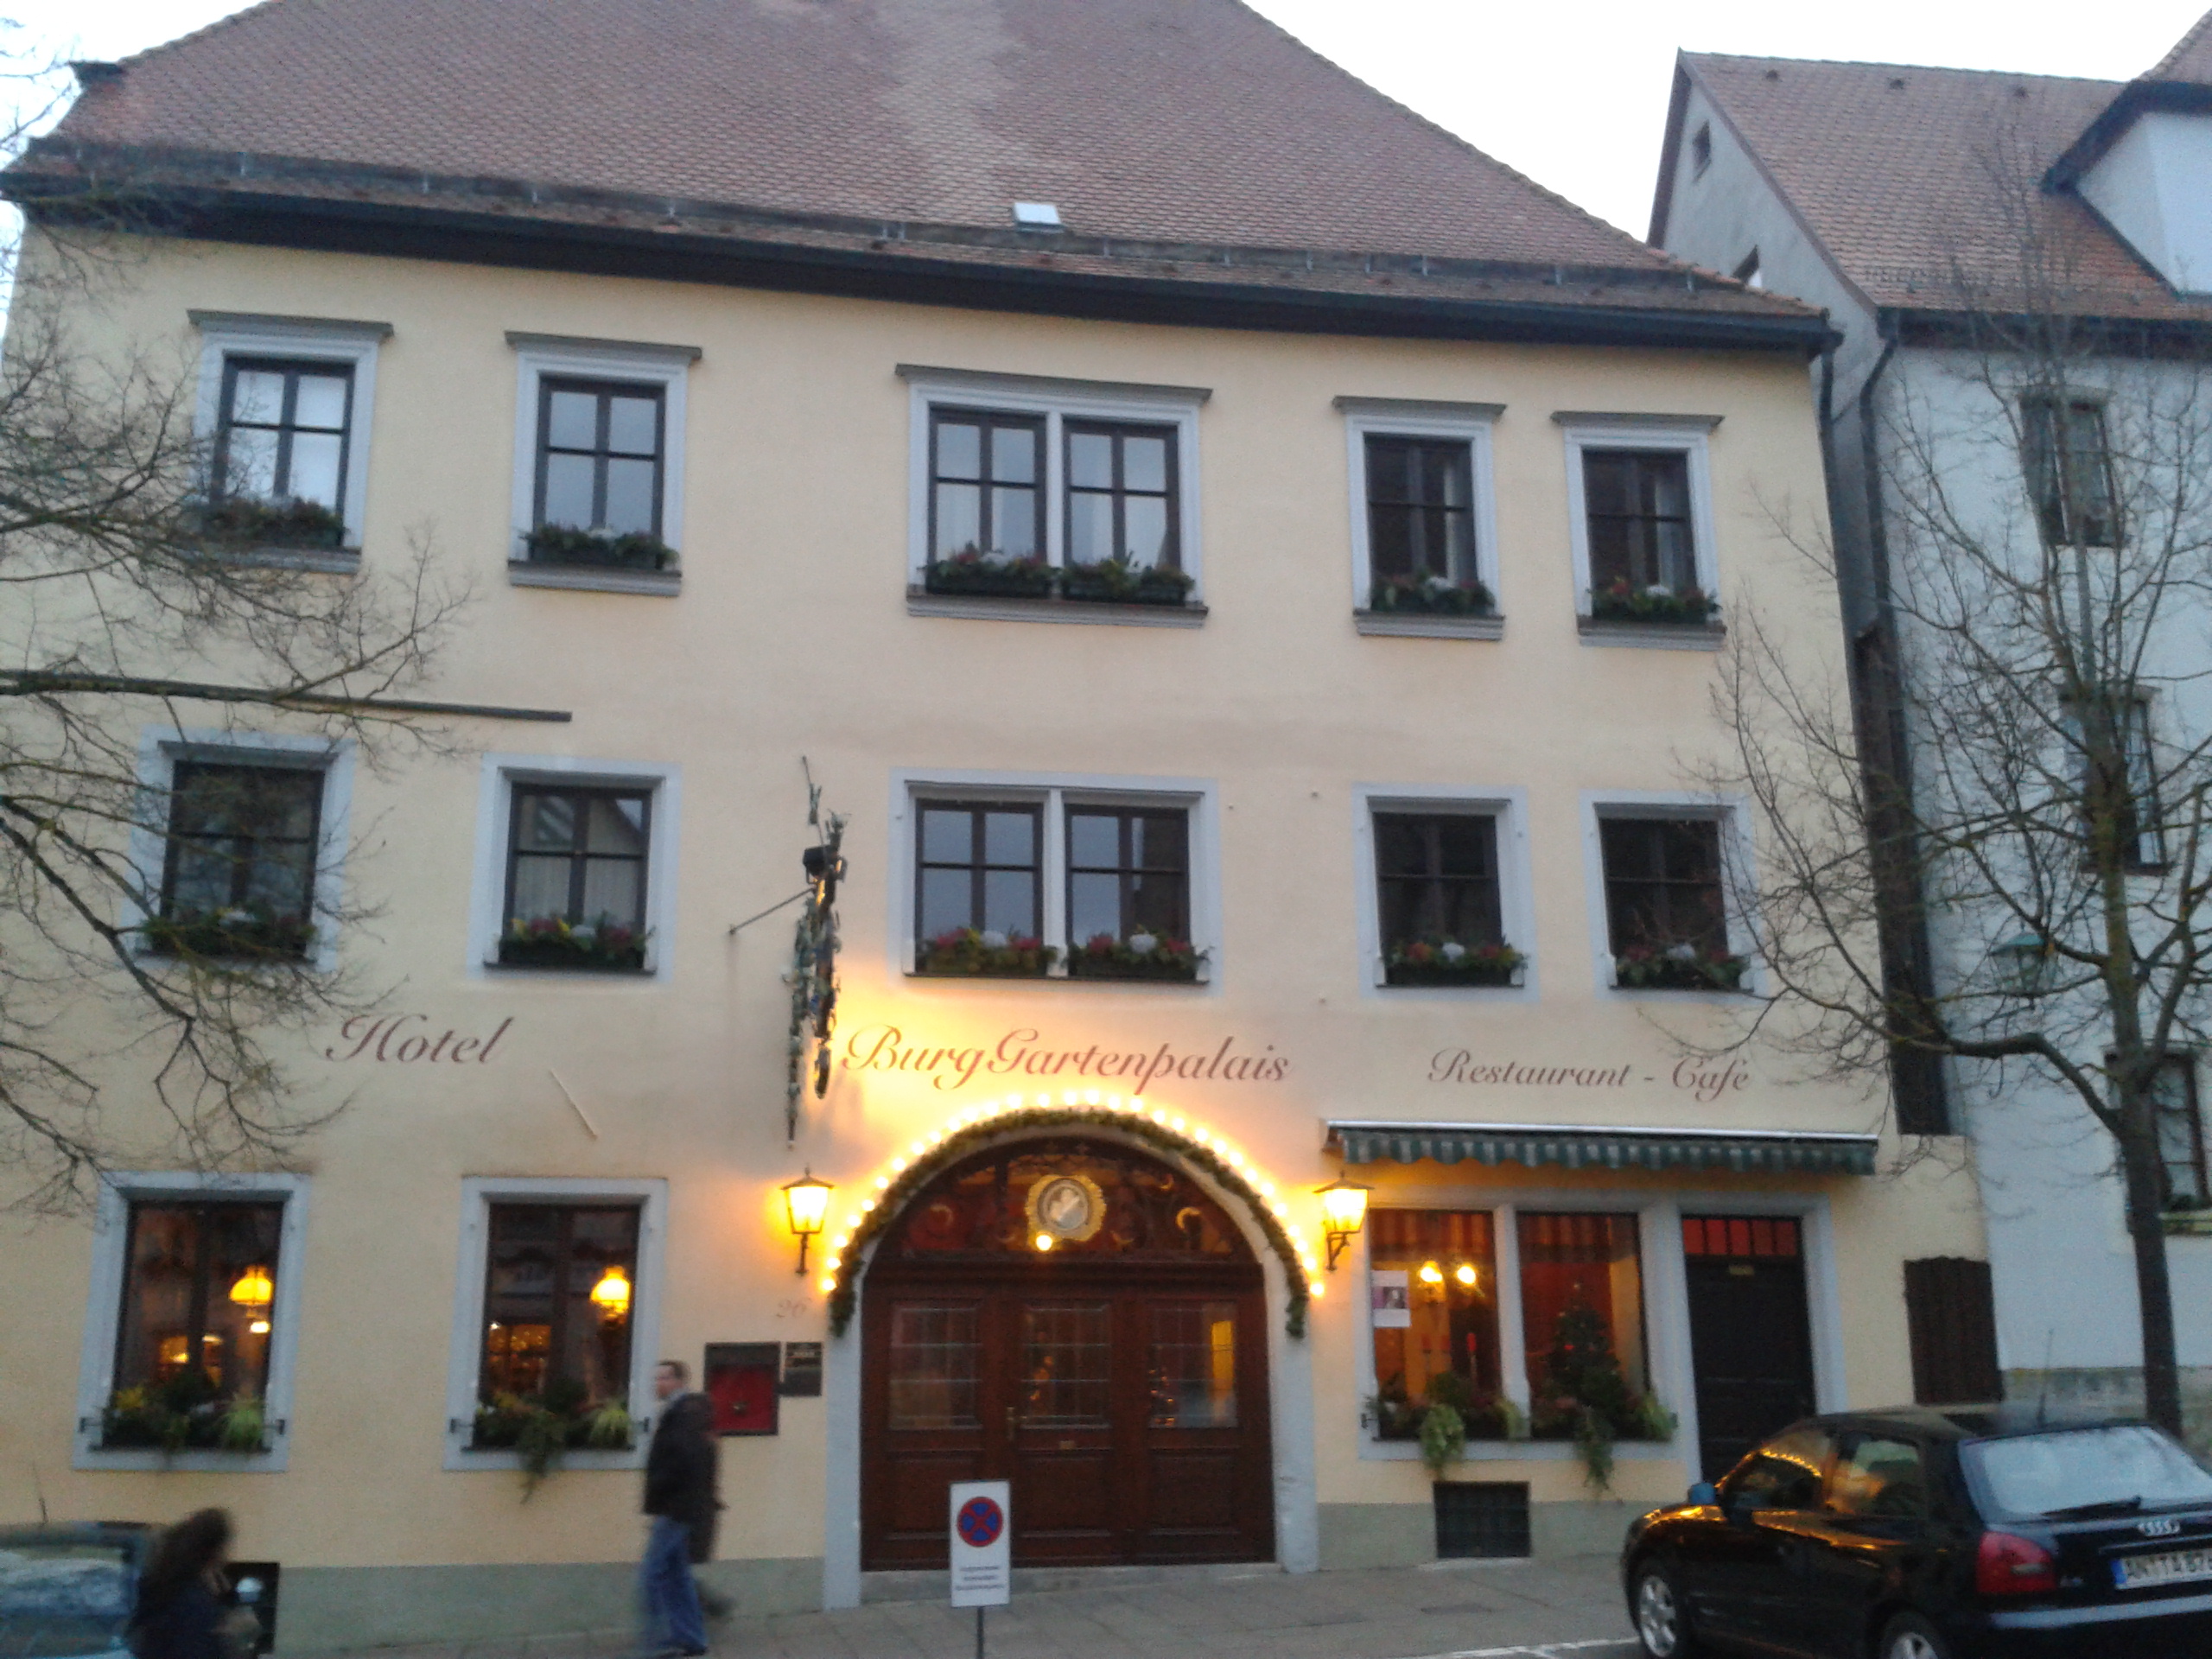 Hotel Burggartenpalais - Barock trifft Zeitgeist